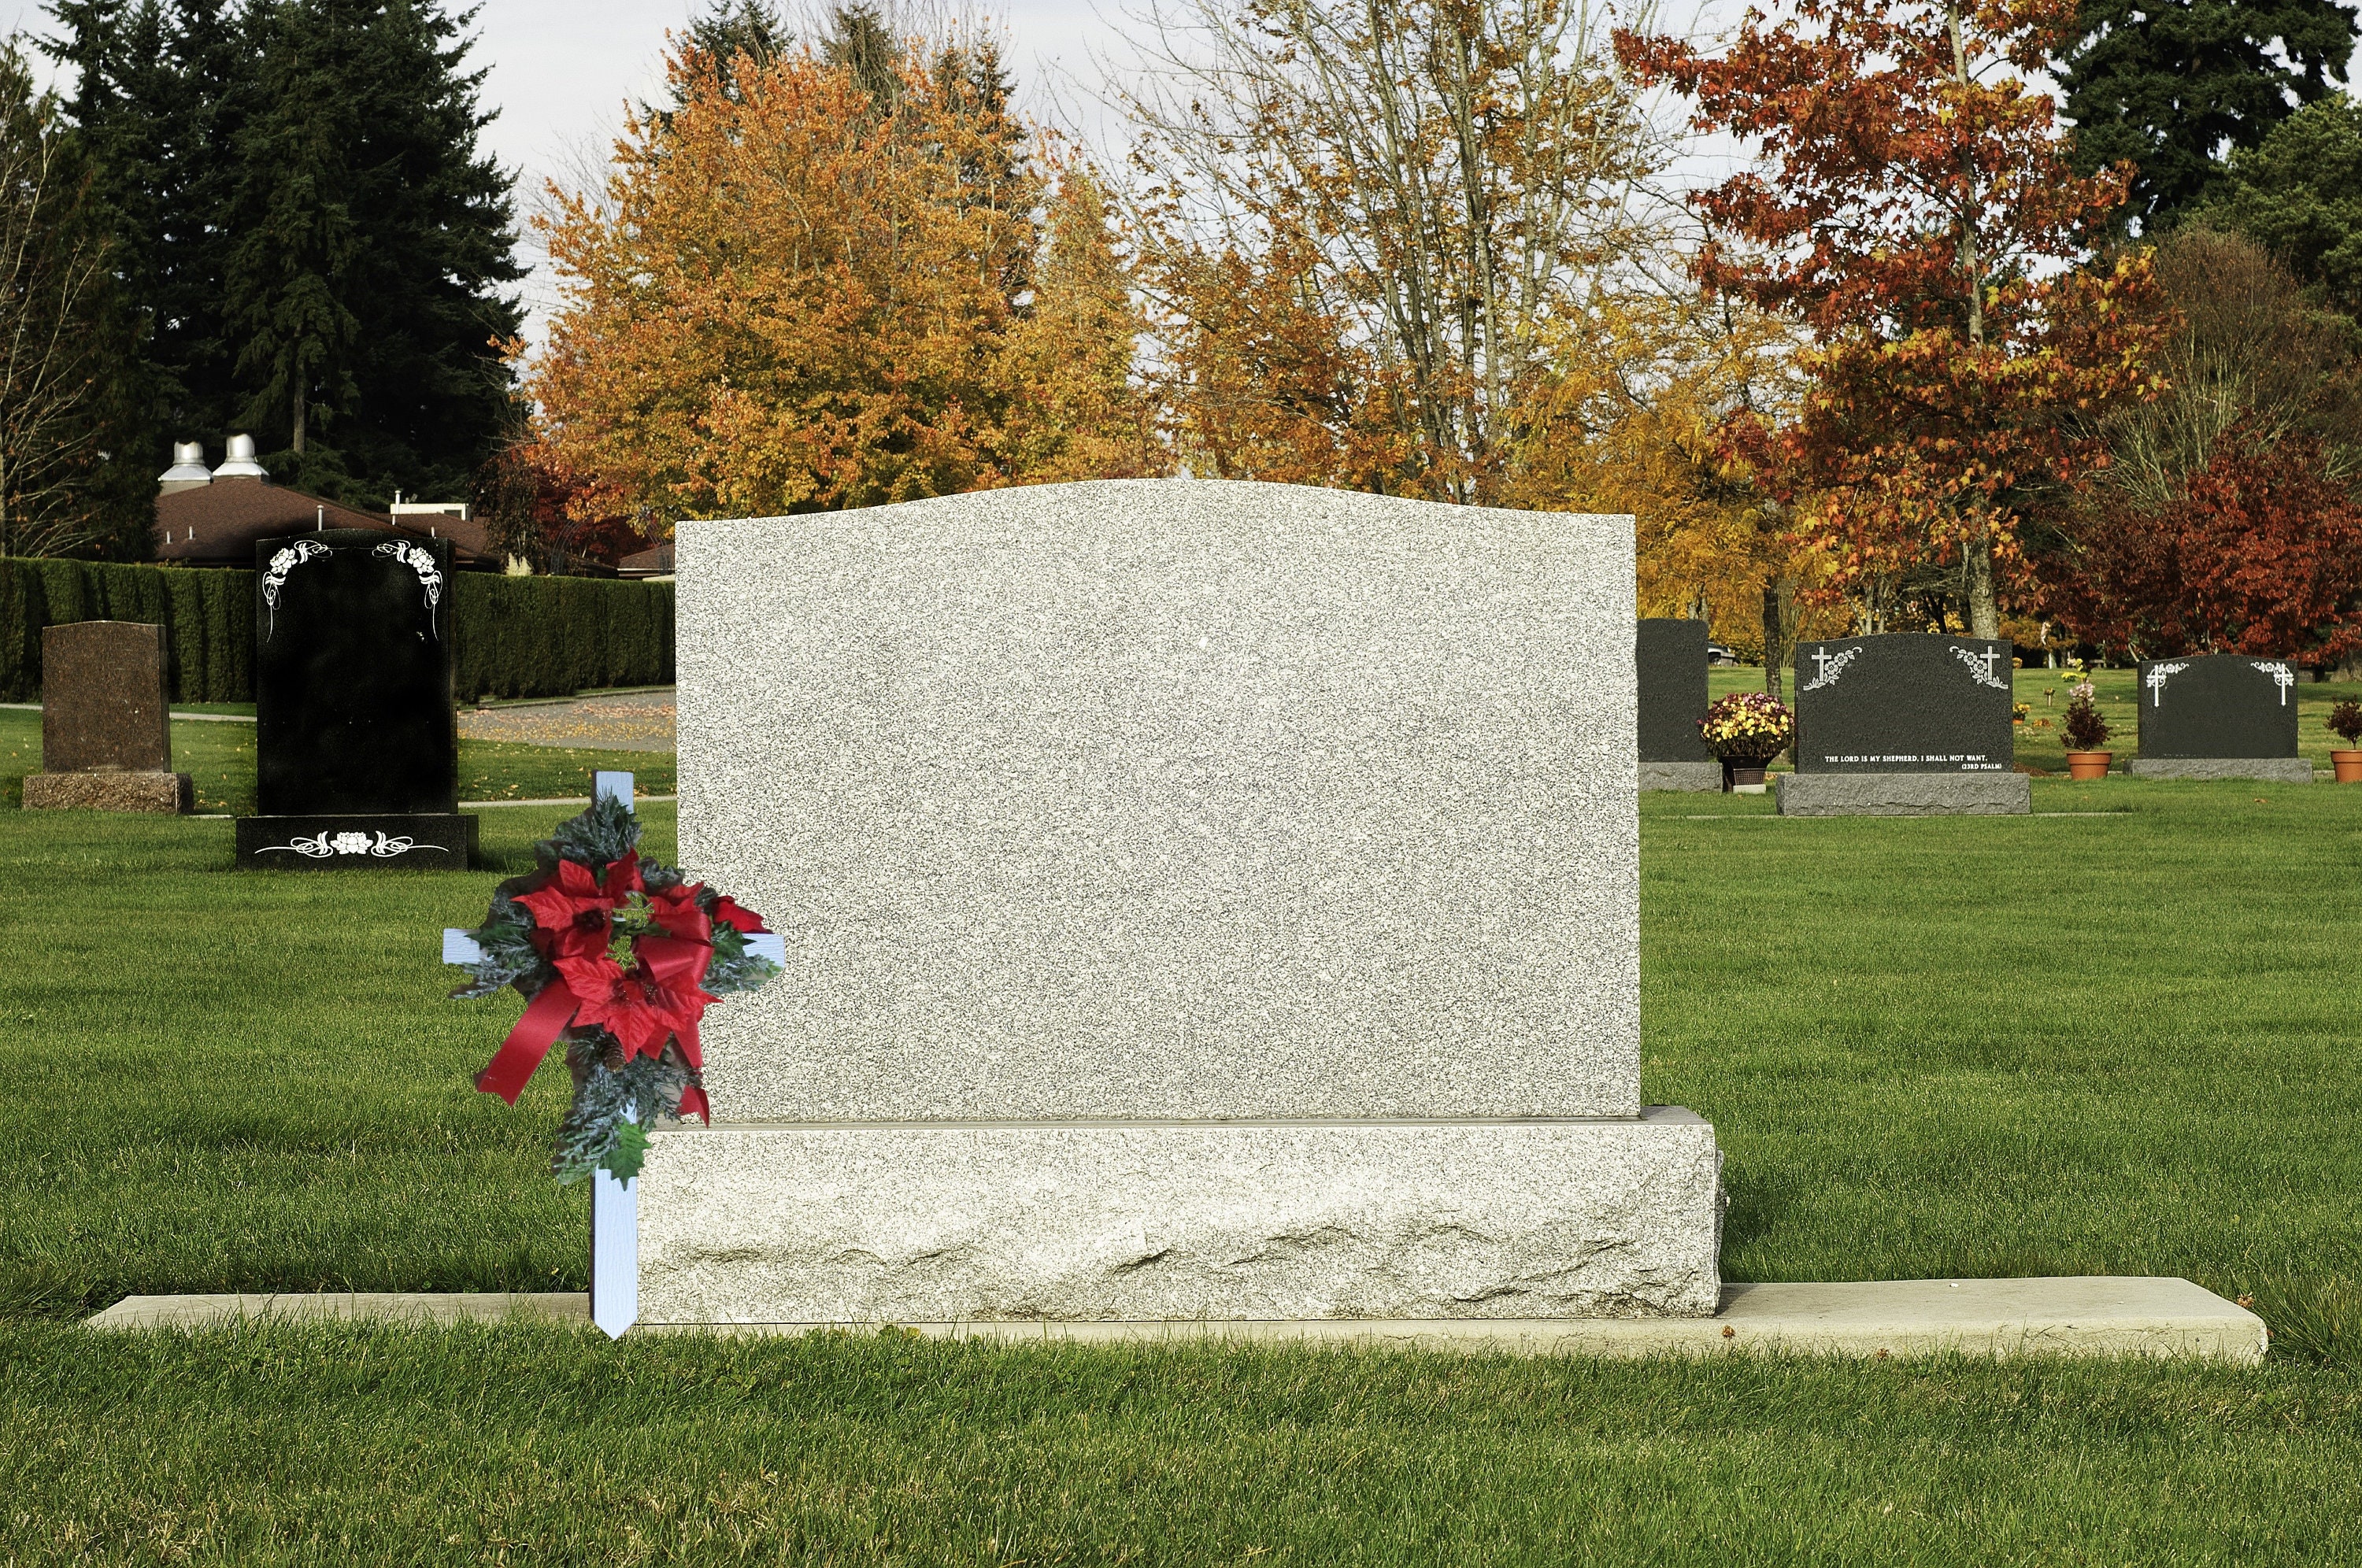 Styrofoam Cemetery Inserts-cemetery Cones-diy Floral Supply-silk